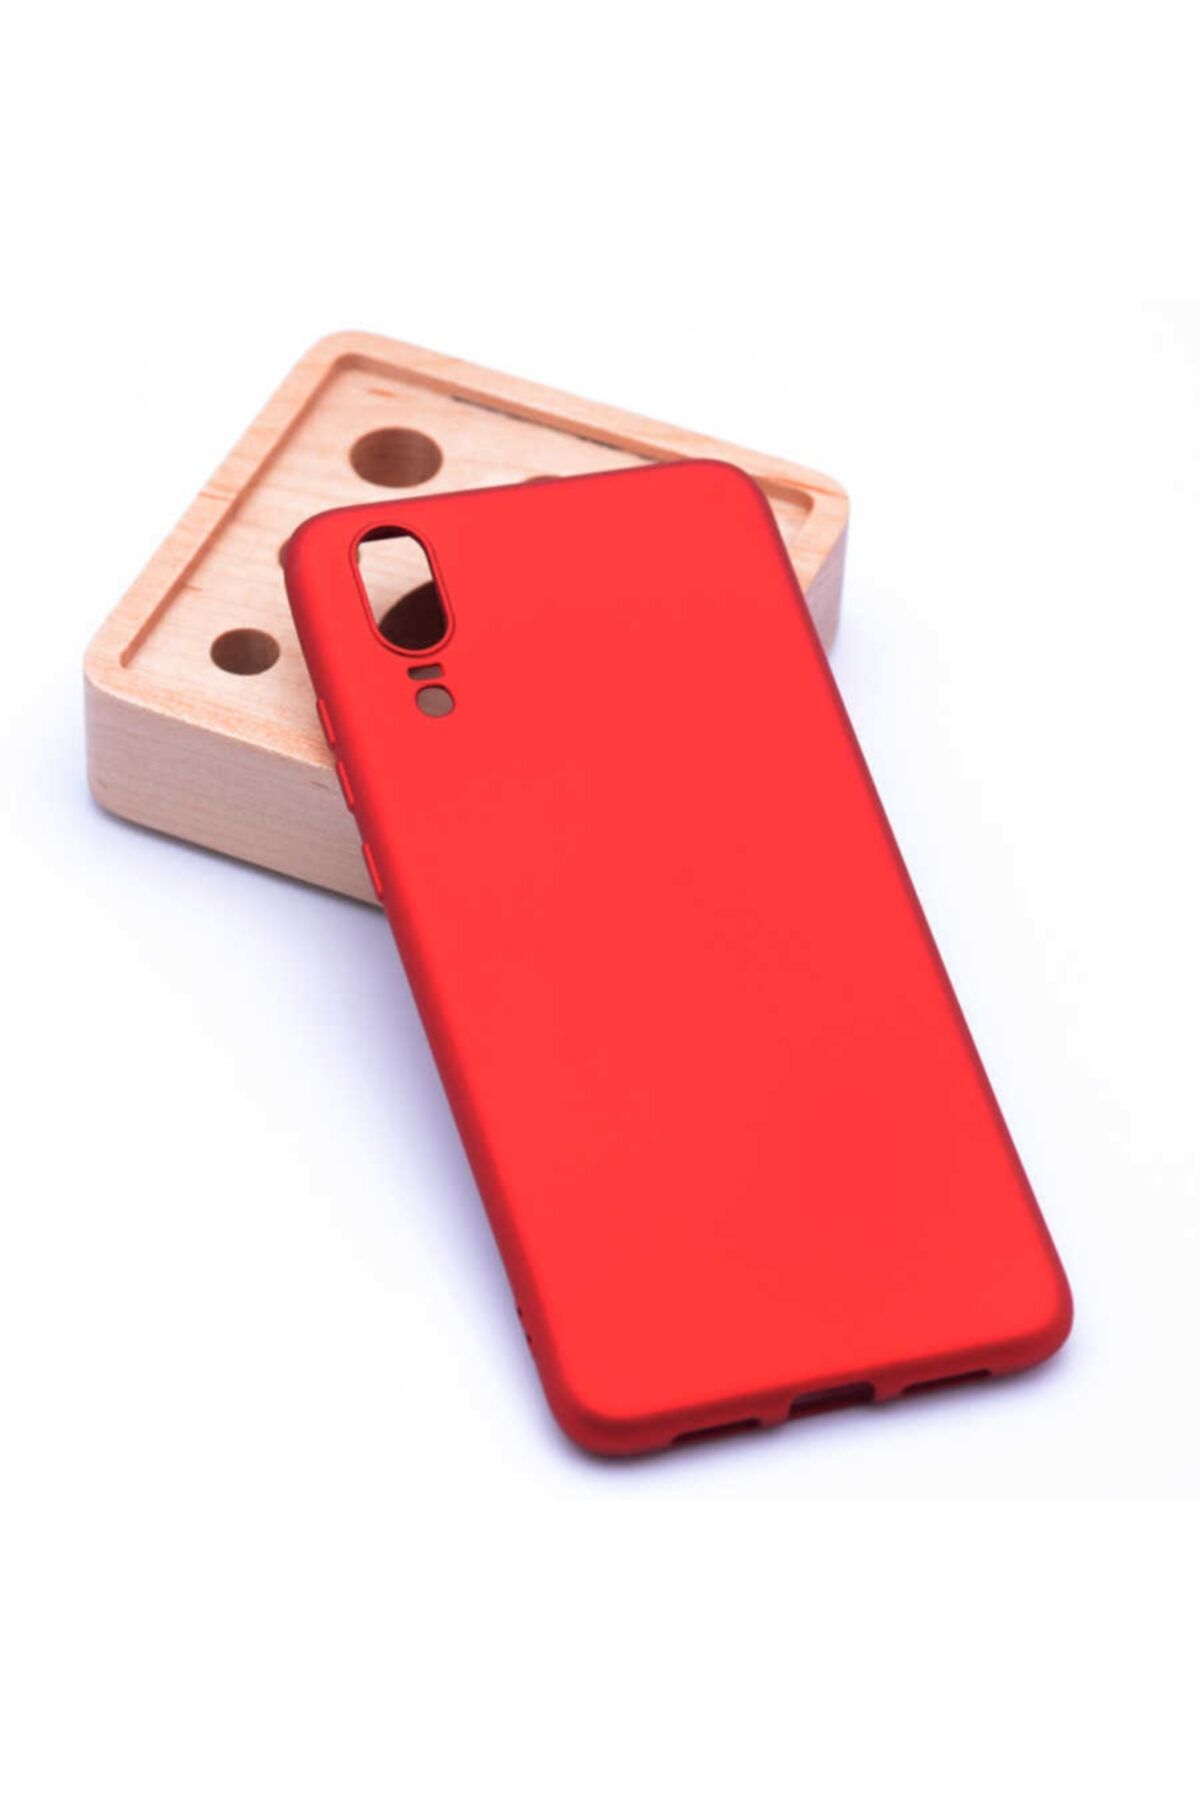 İncisoft Huawei P20 Uyumlu Ince Yumuşak Soft Tasarım Renkli Silikon Kılıf